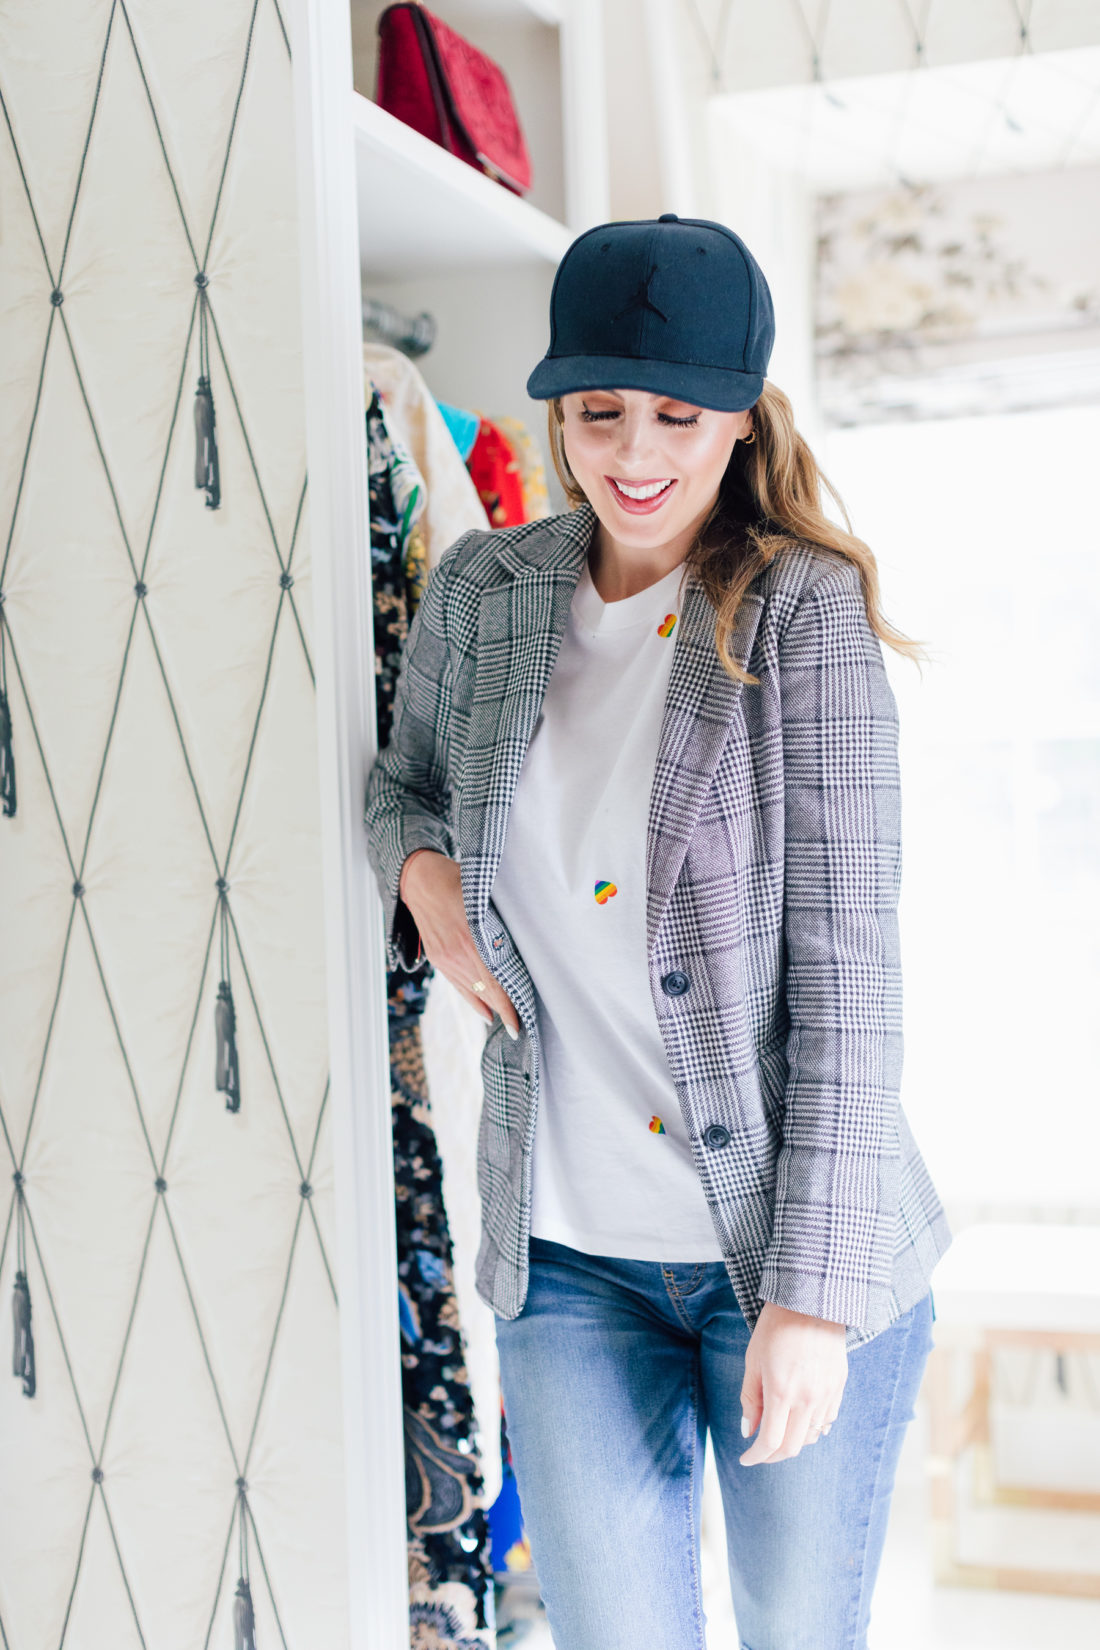 Eva Amurri Martino wears a fall blazer in her walk-in closet